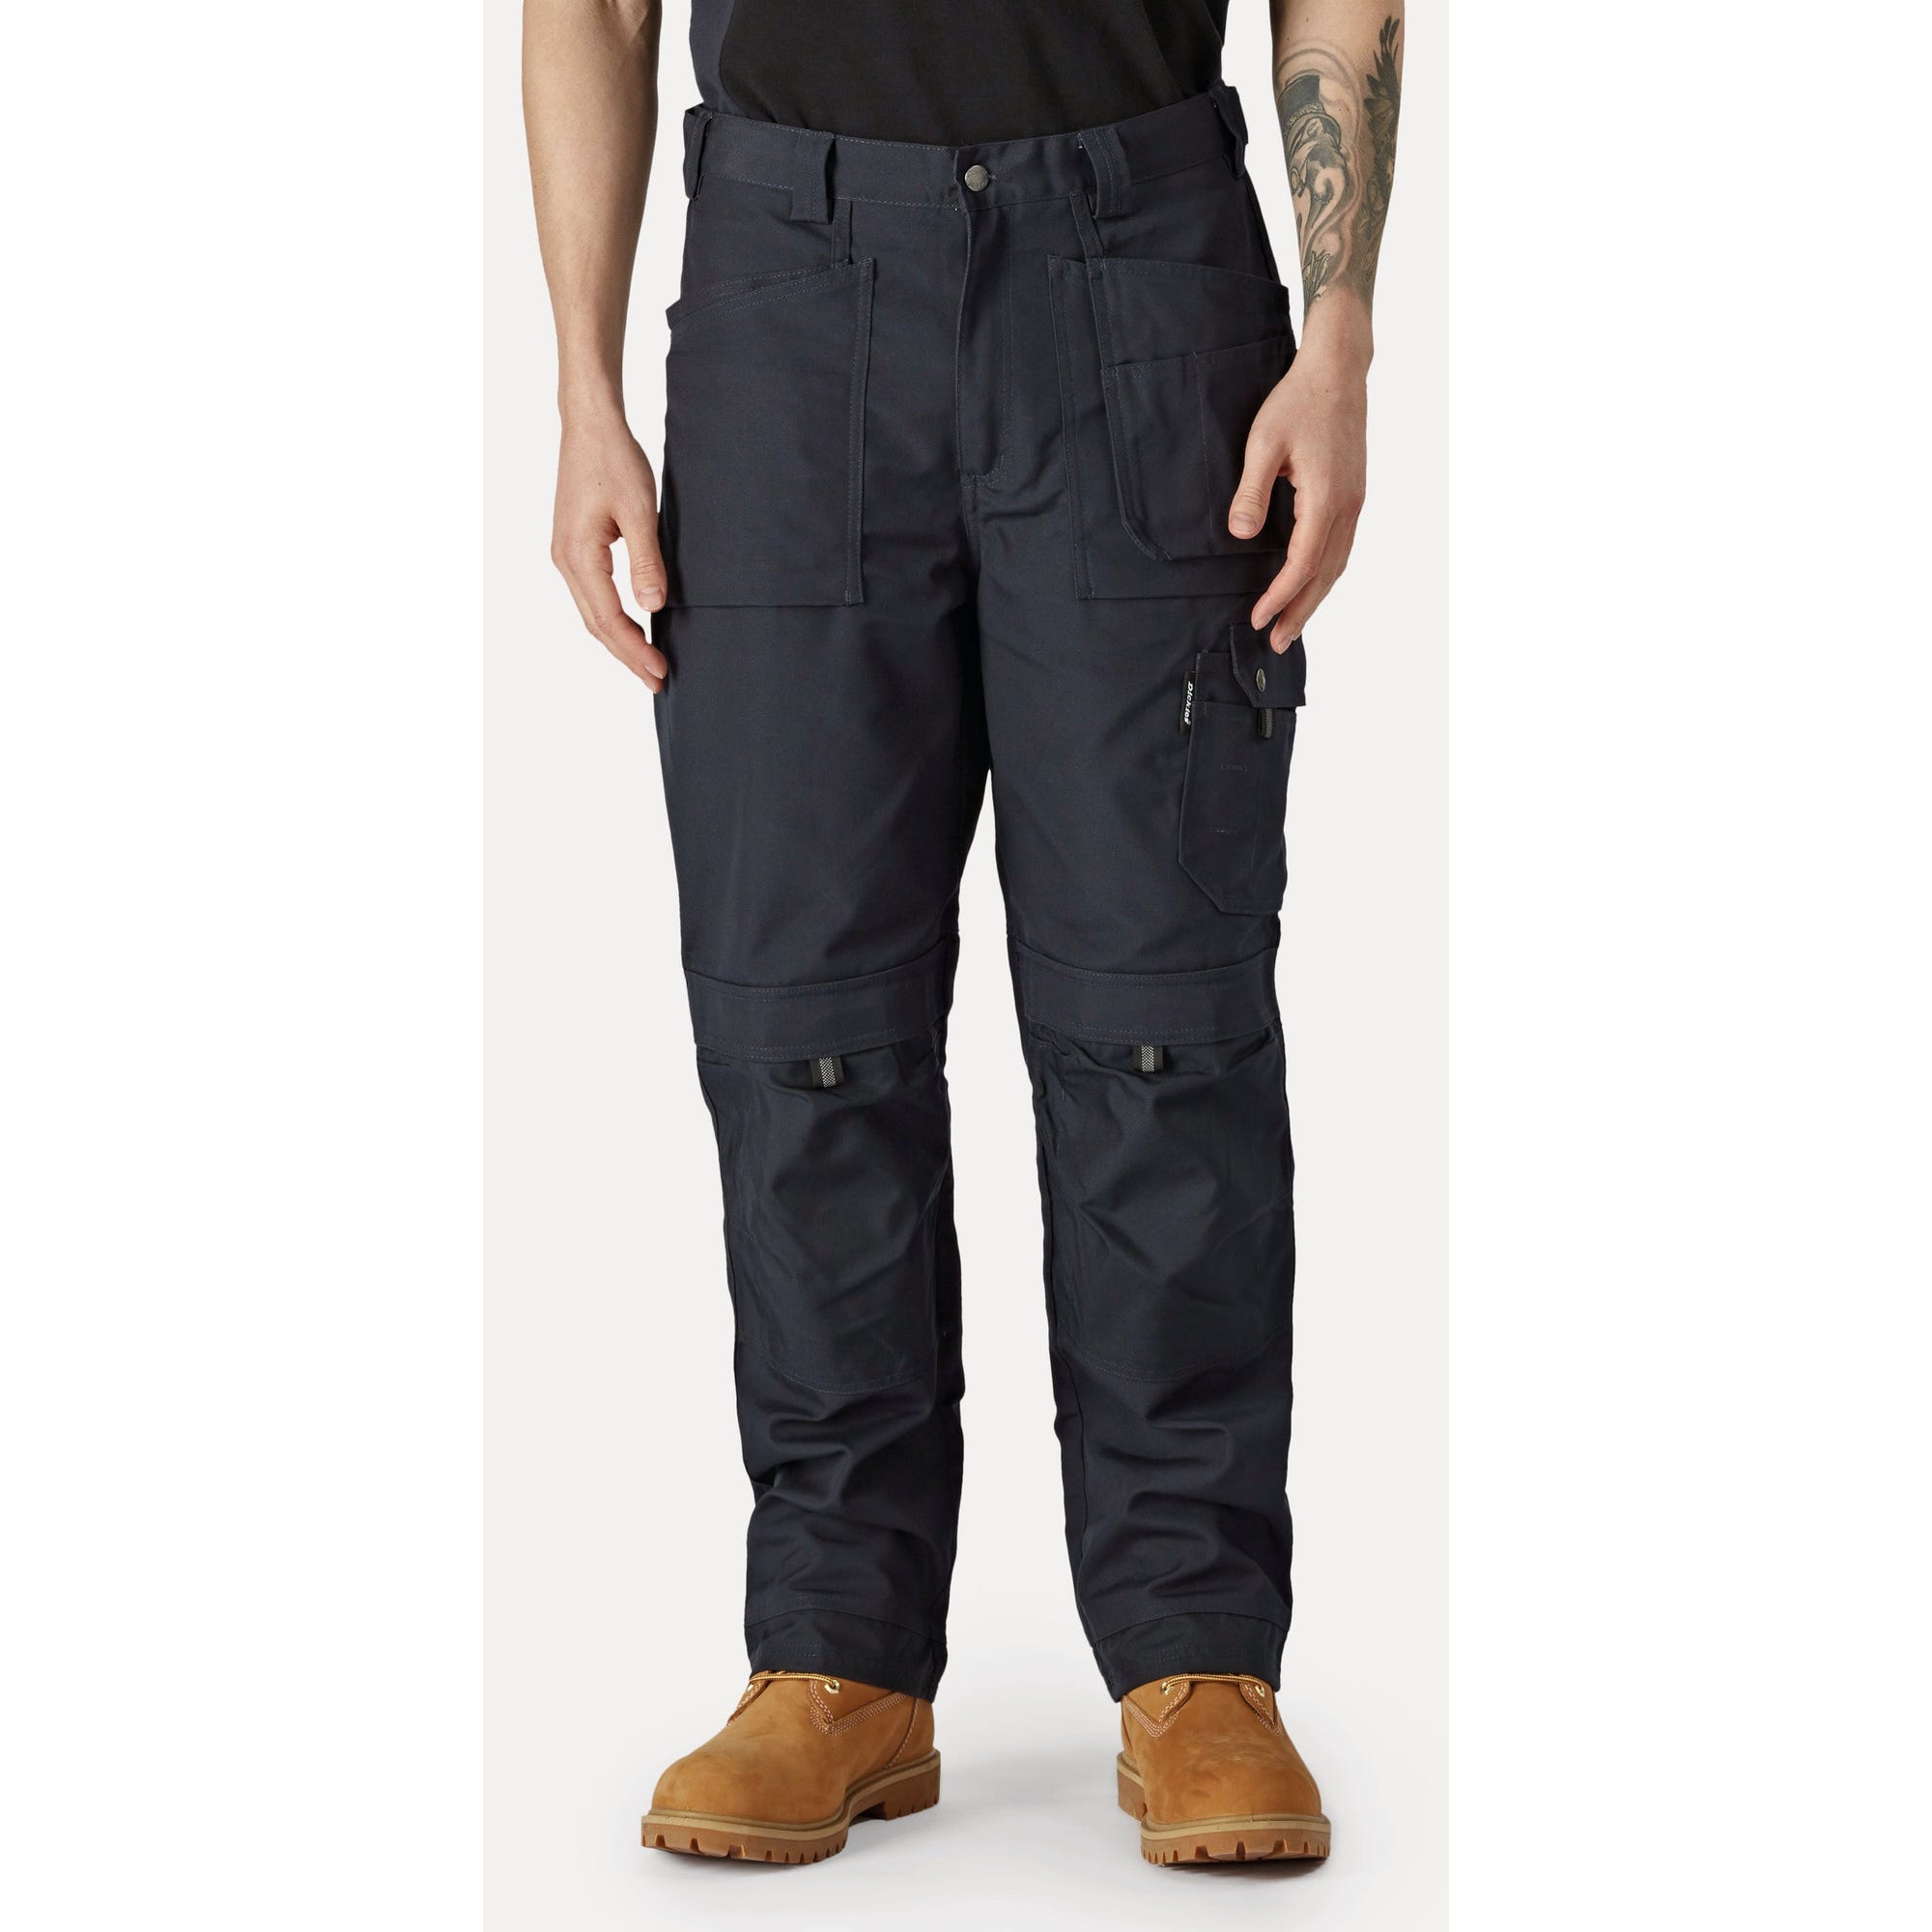 Pantalon Eisenhower multi-poches Noir - Dickies - Taille 42 5